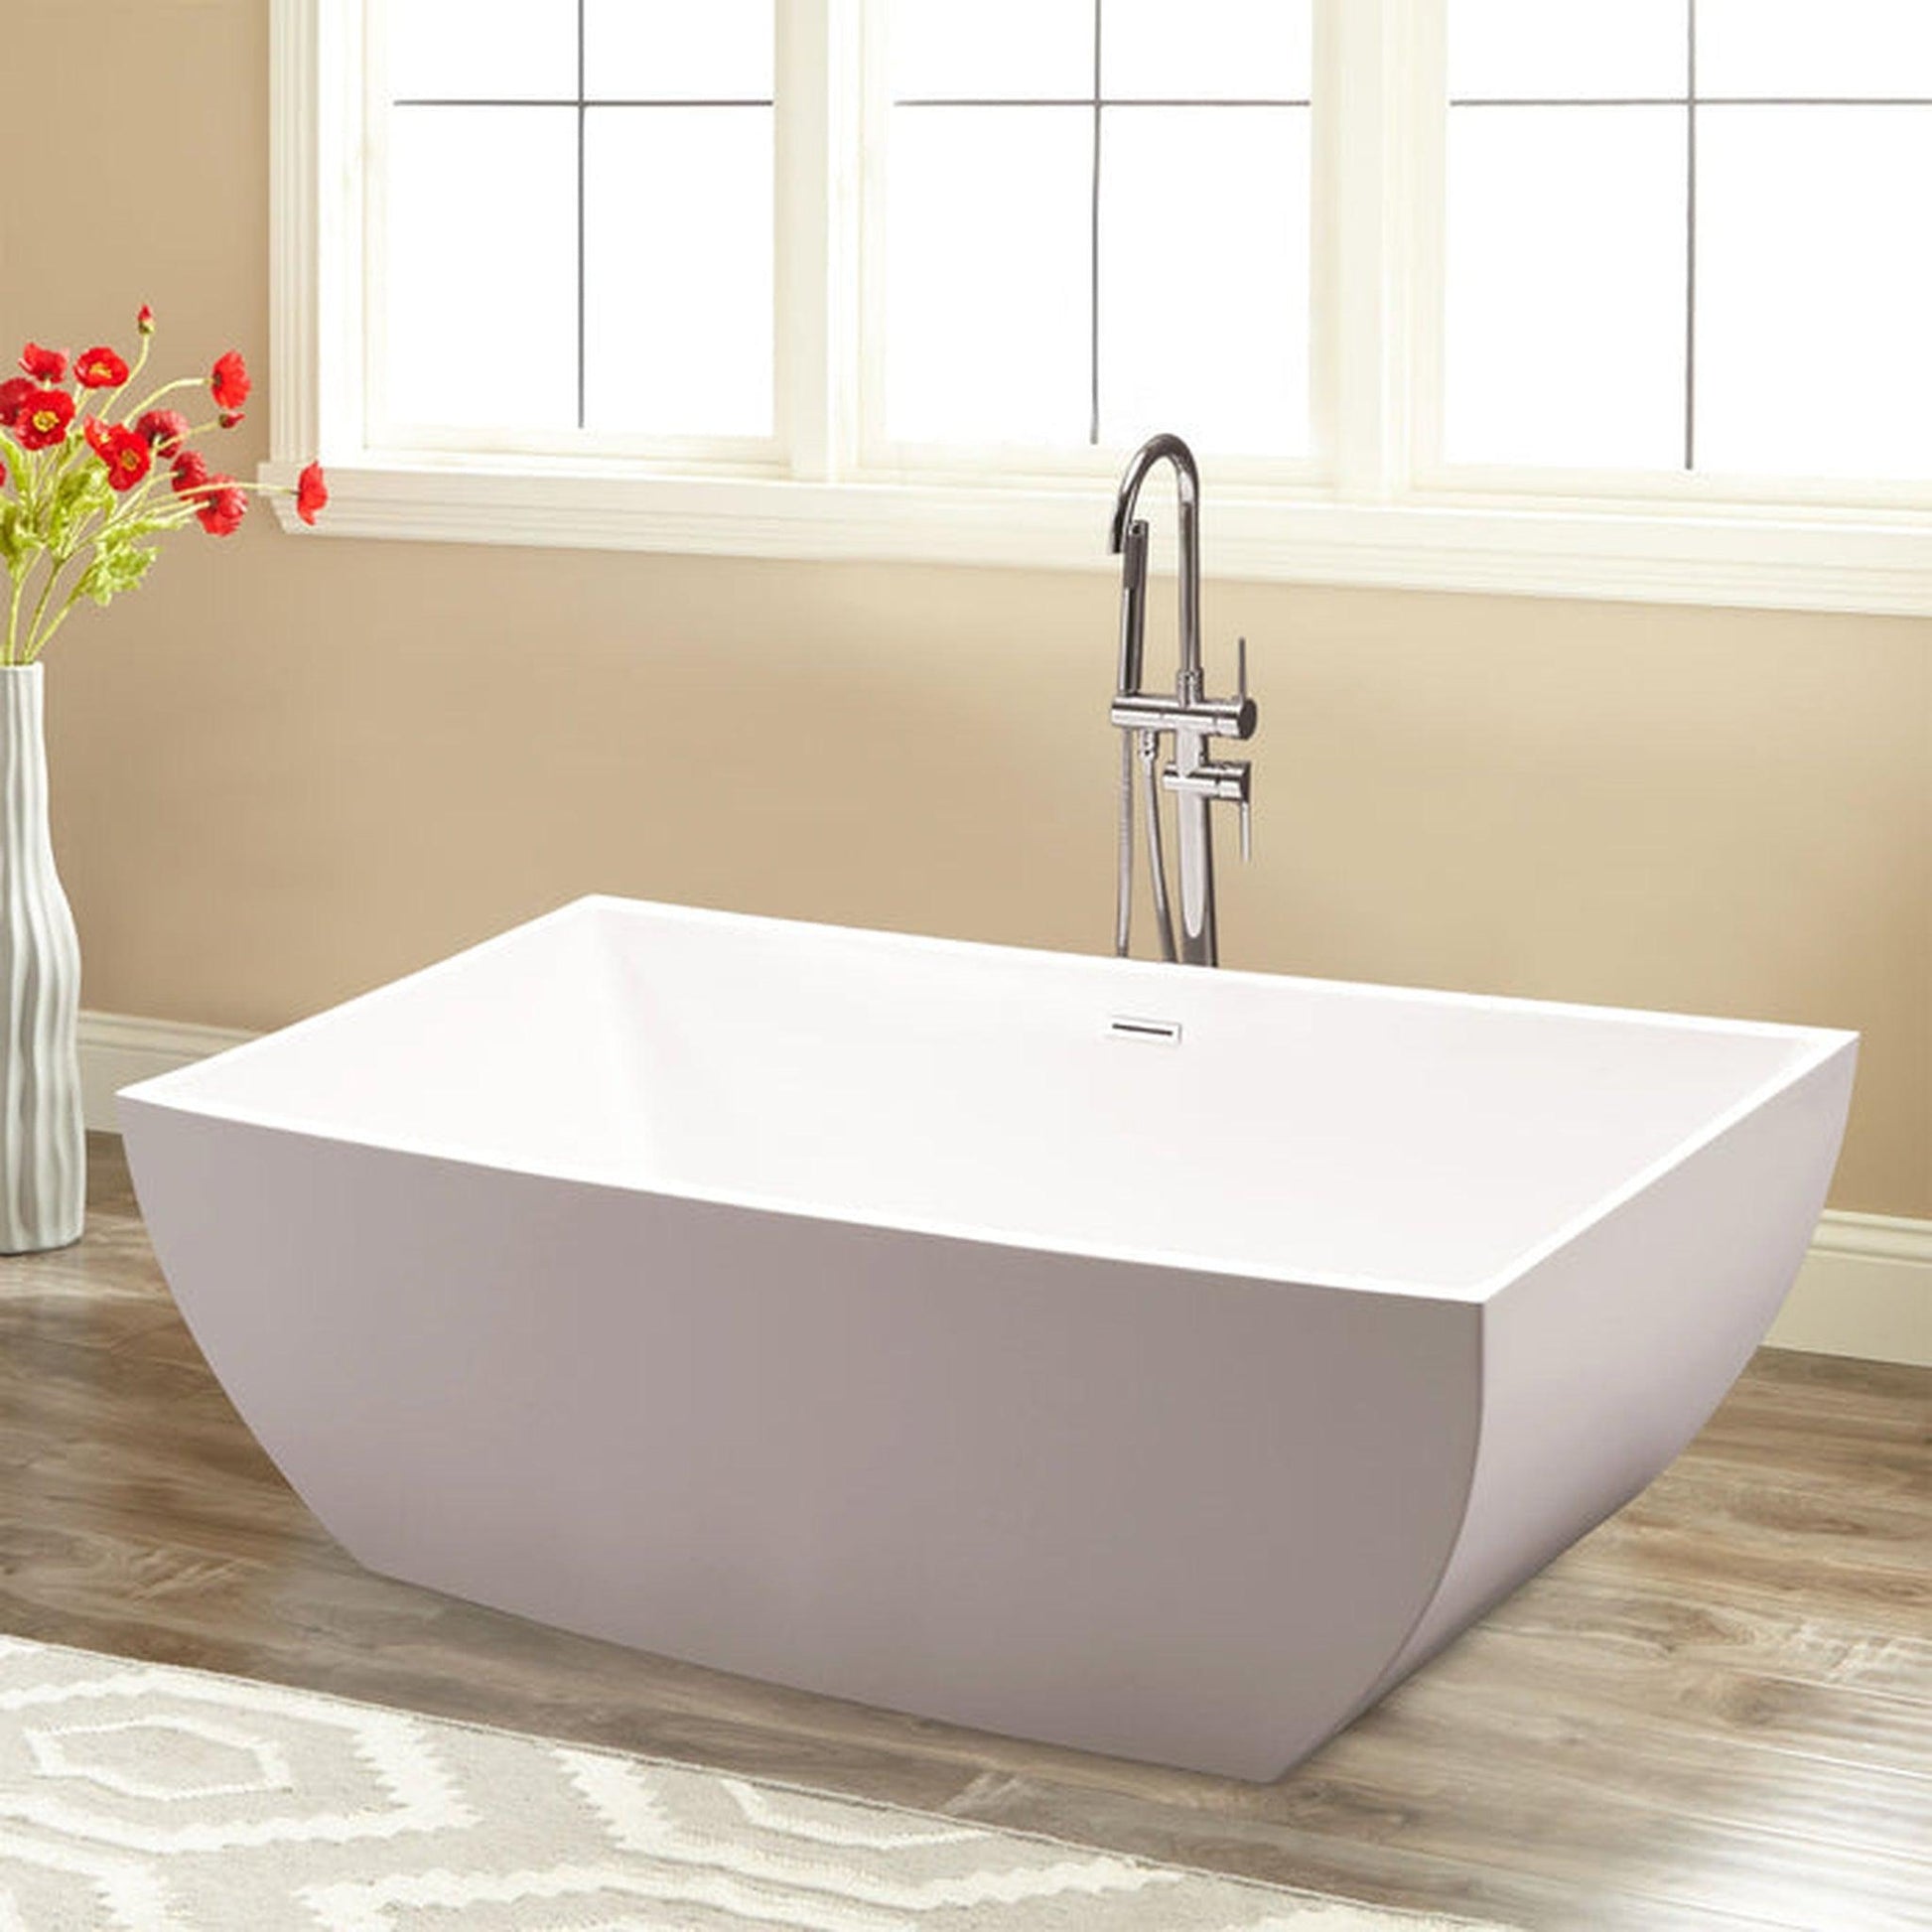 Vanity Art VA6821 59" White Acrylic Freestanding Soaking Bathtub With Titanium Gold Slotted Overflow & Pop-up Drain